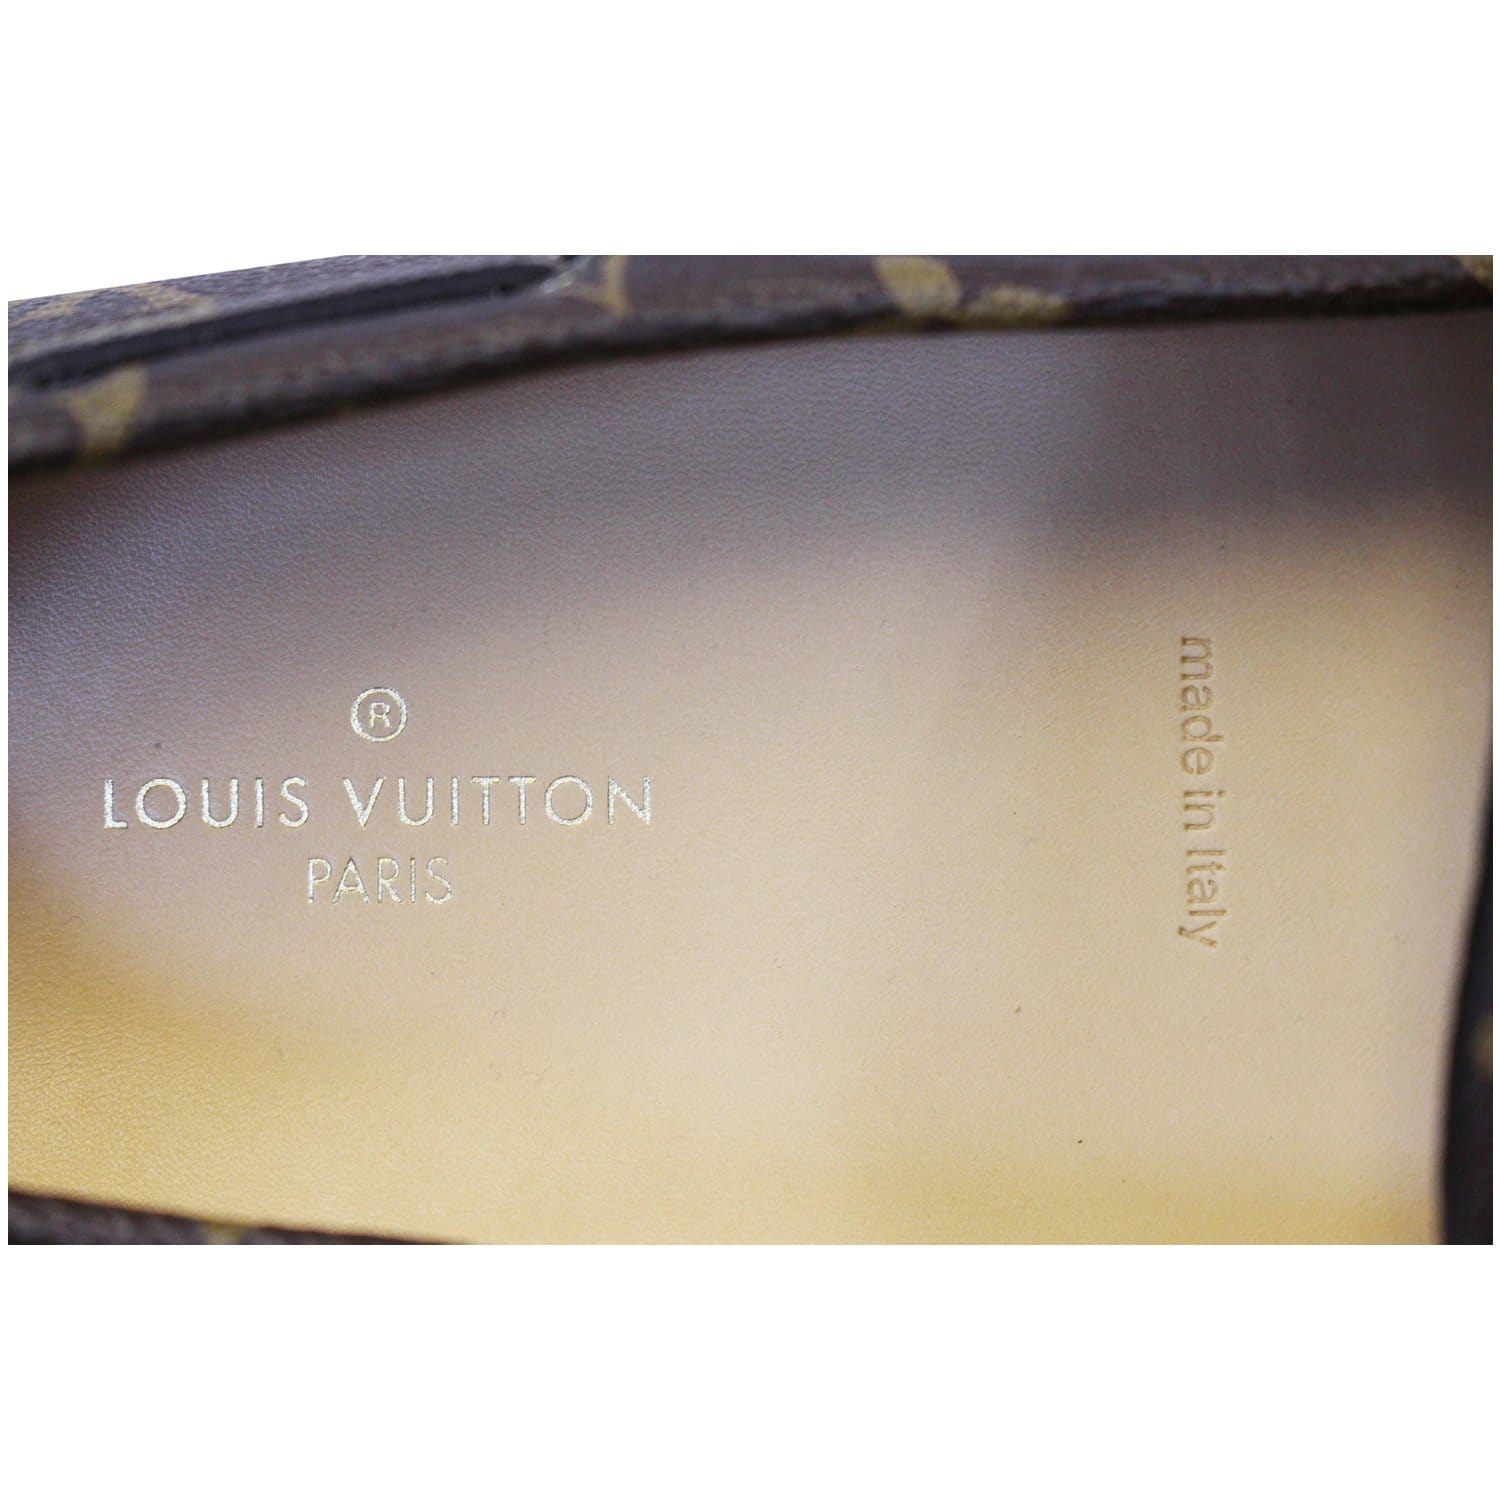 Louis Vuitton, Shoes, Mens Louis Vuitton Camo Arizona Moccasin Like New  Sz 85